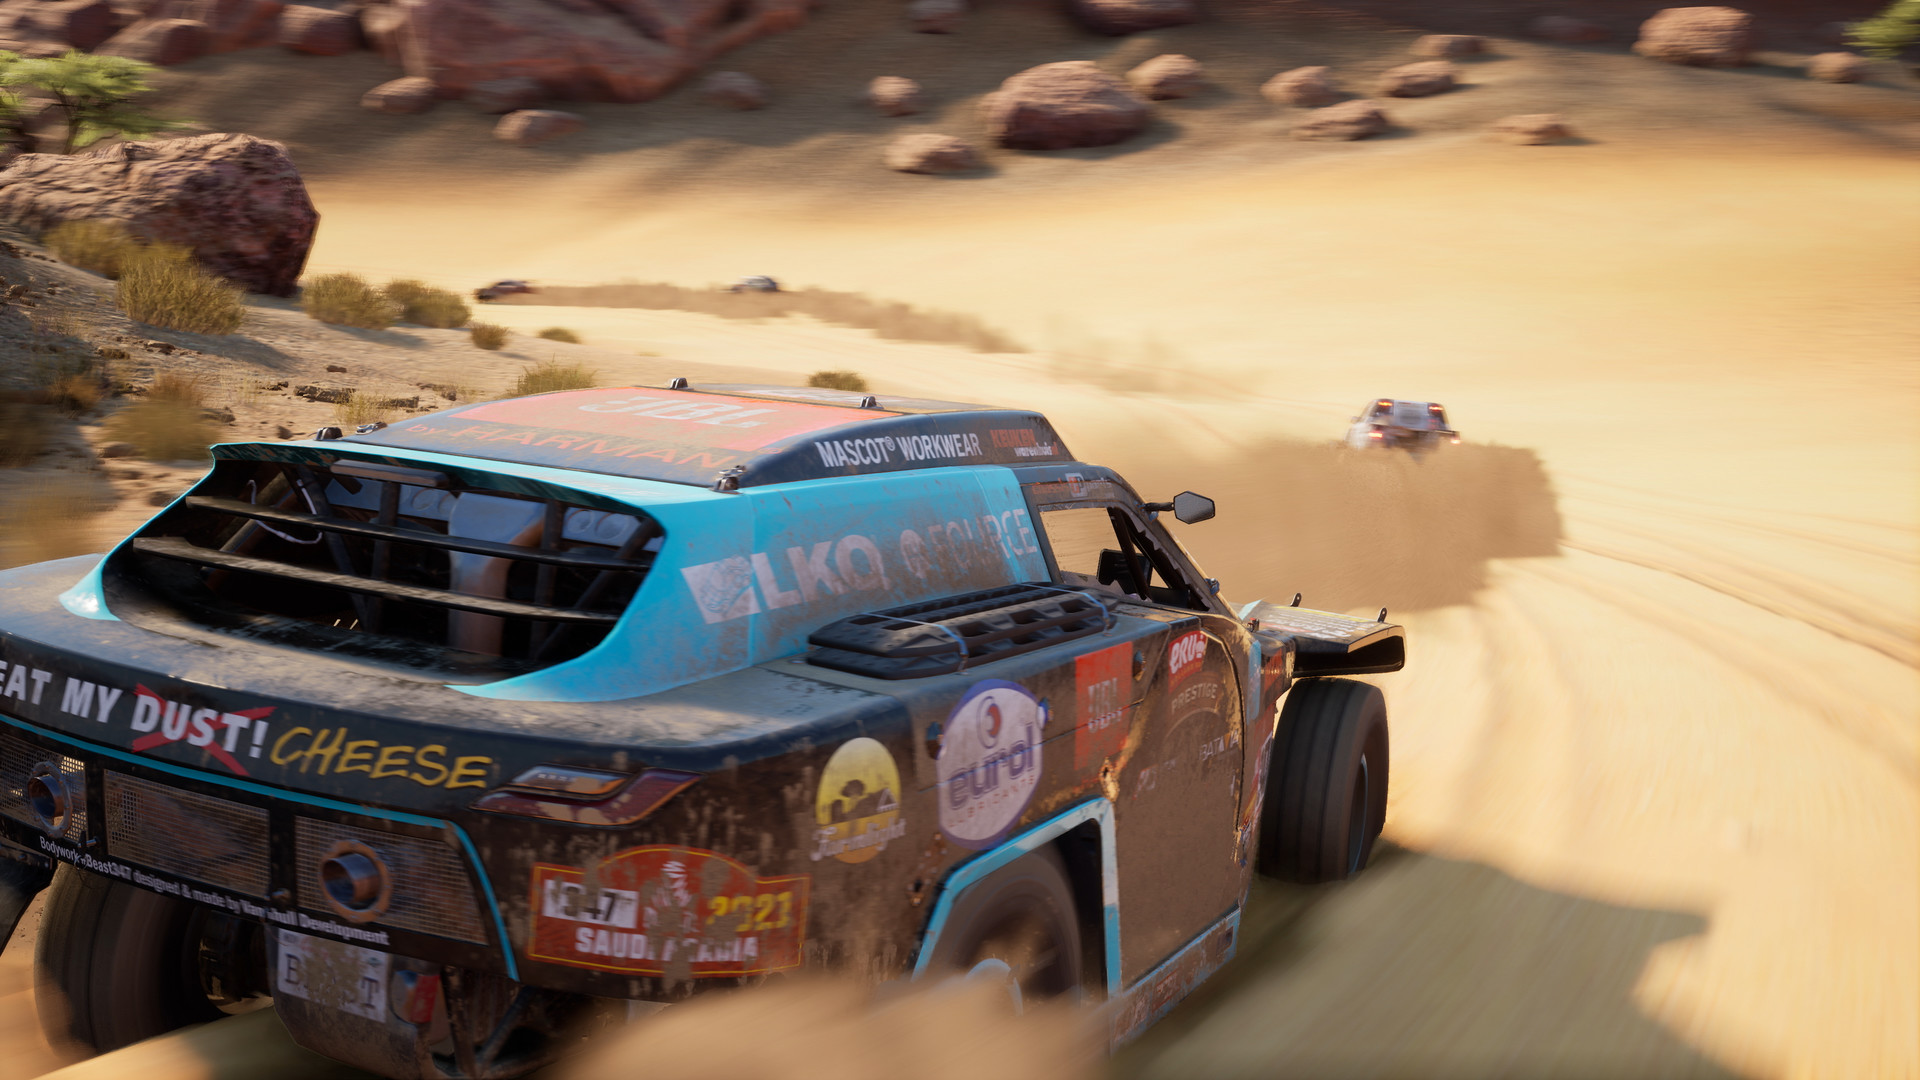 Dakar Desert Rally on Steam